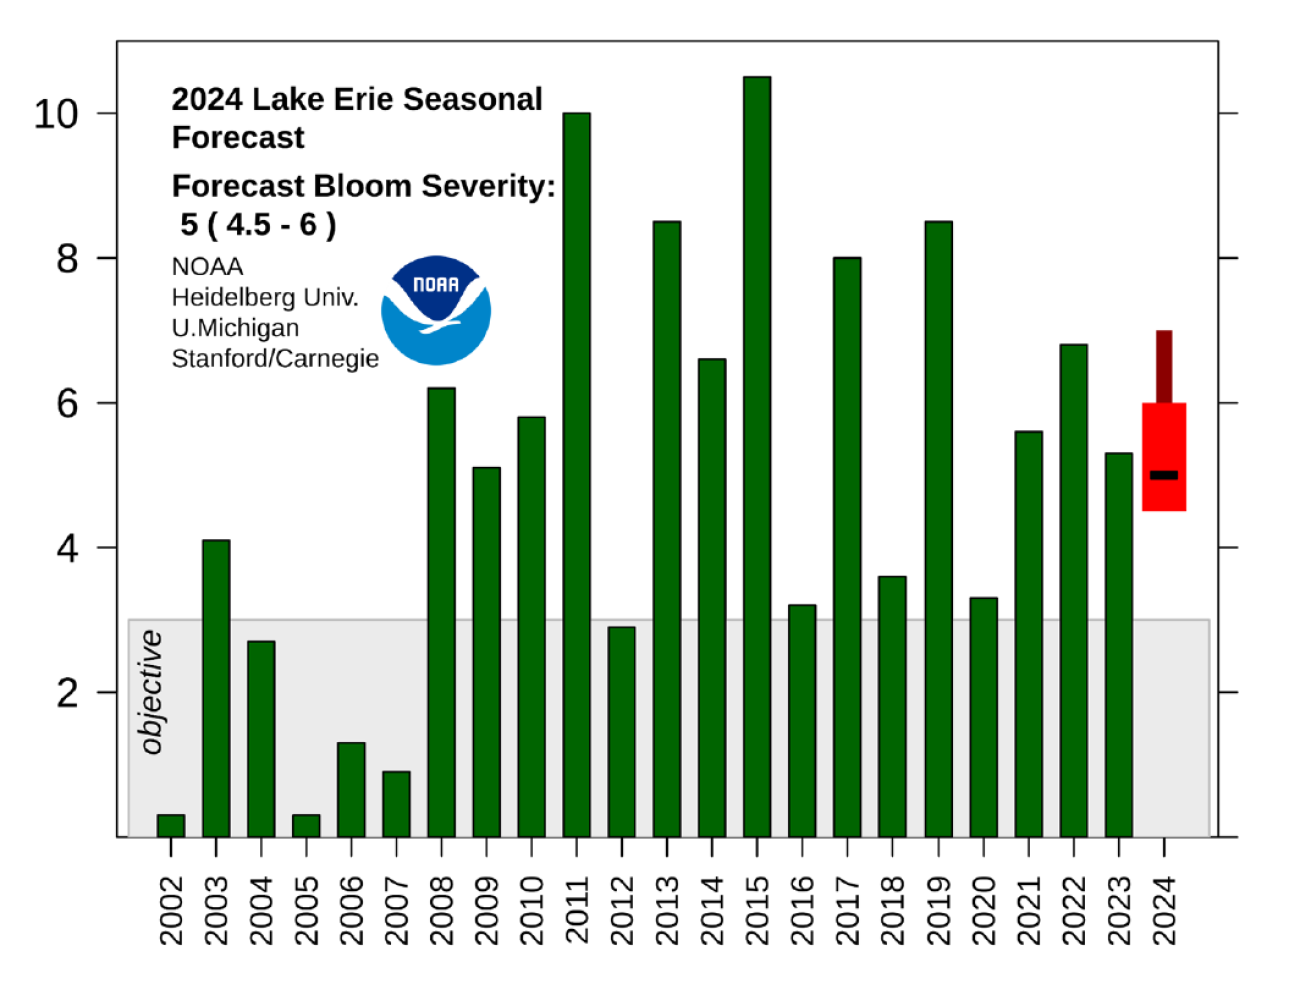 2024 Lake Erie Seasonal Forecast